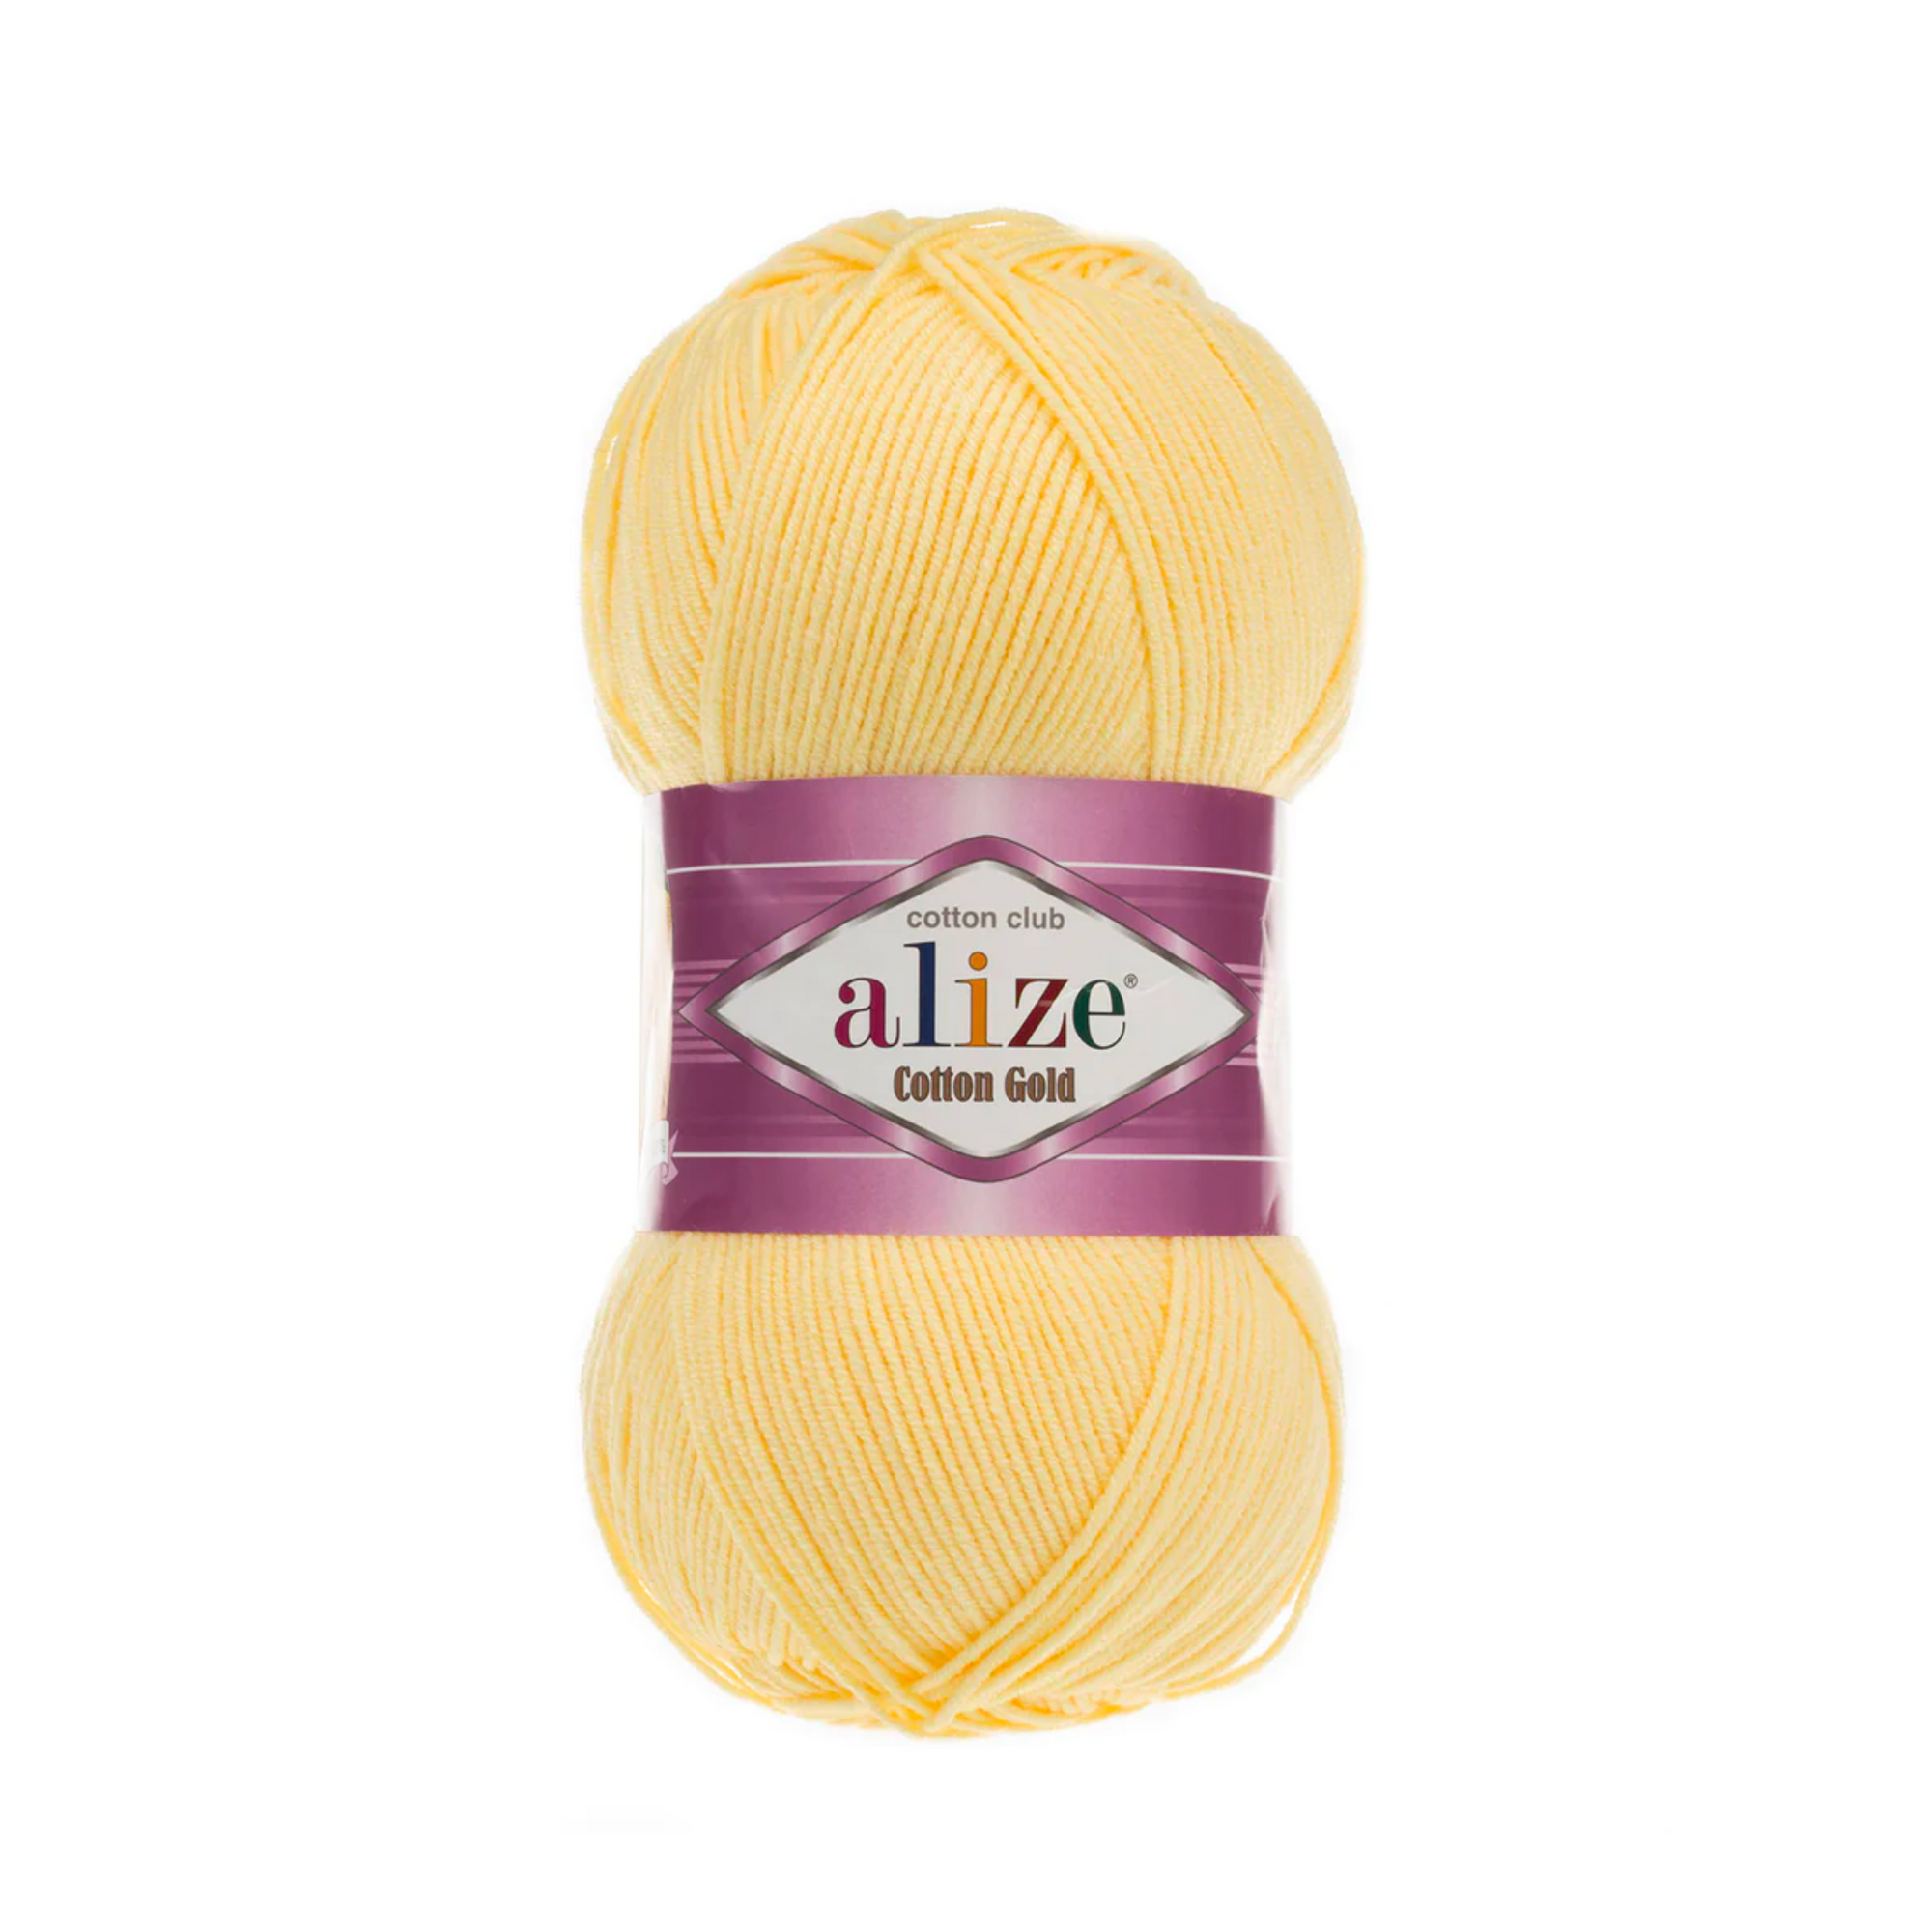 Alize Cotton Gold Knitting Yarn, Midnight Blue - 279